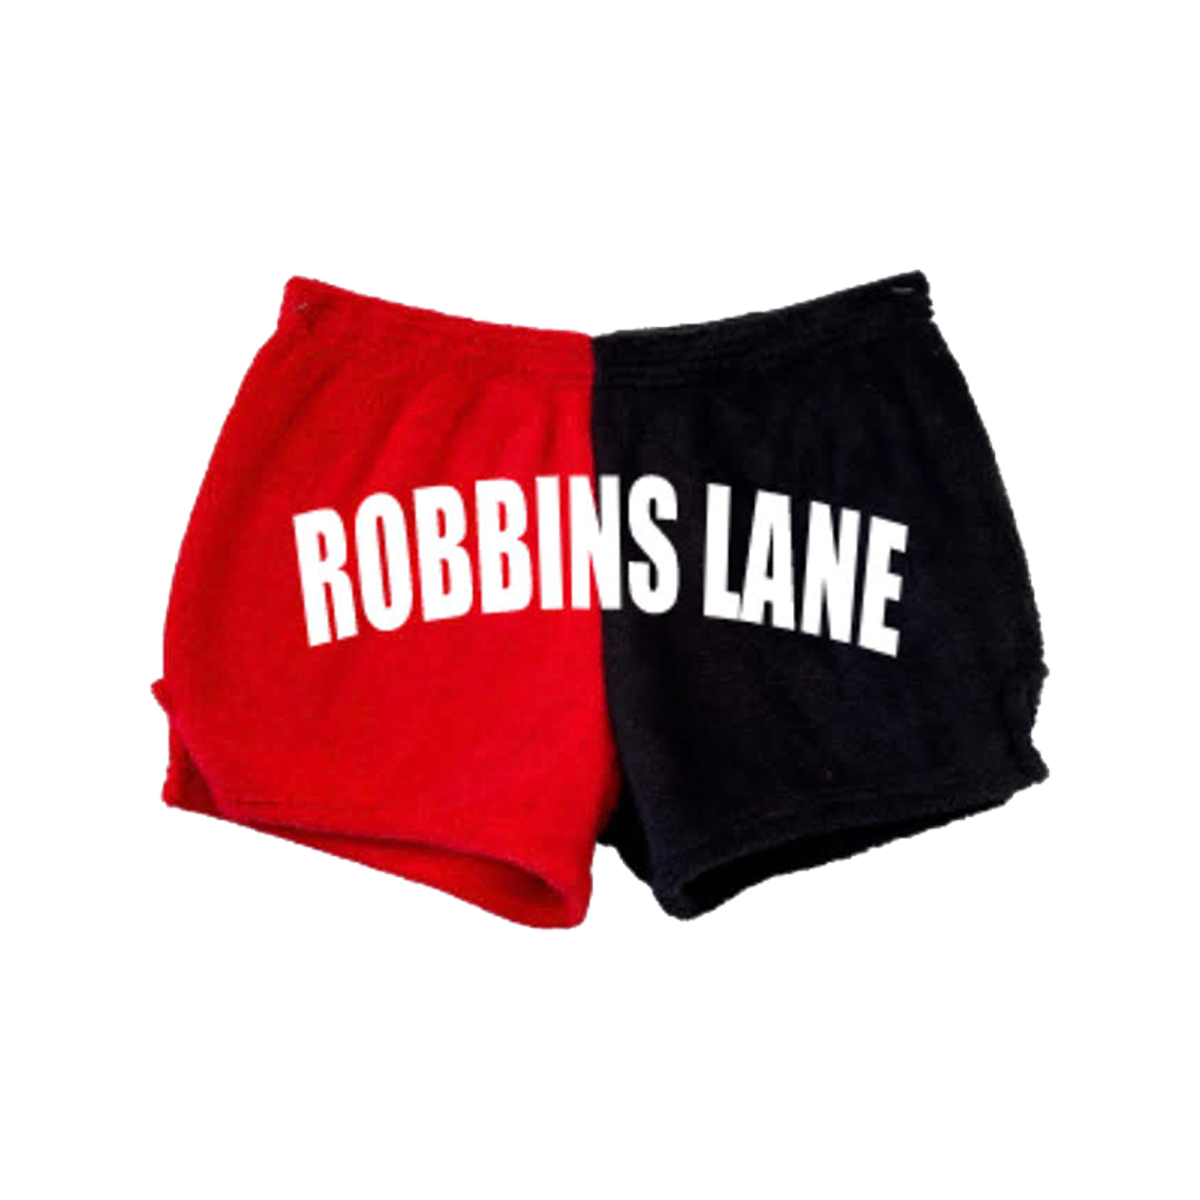 Robbins Lane Fuzzy Red/Black PJ Shorts